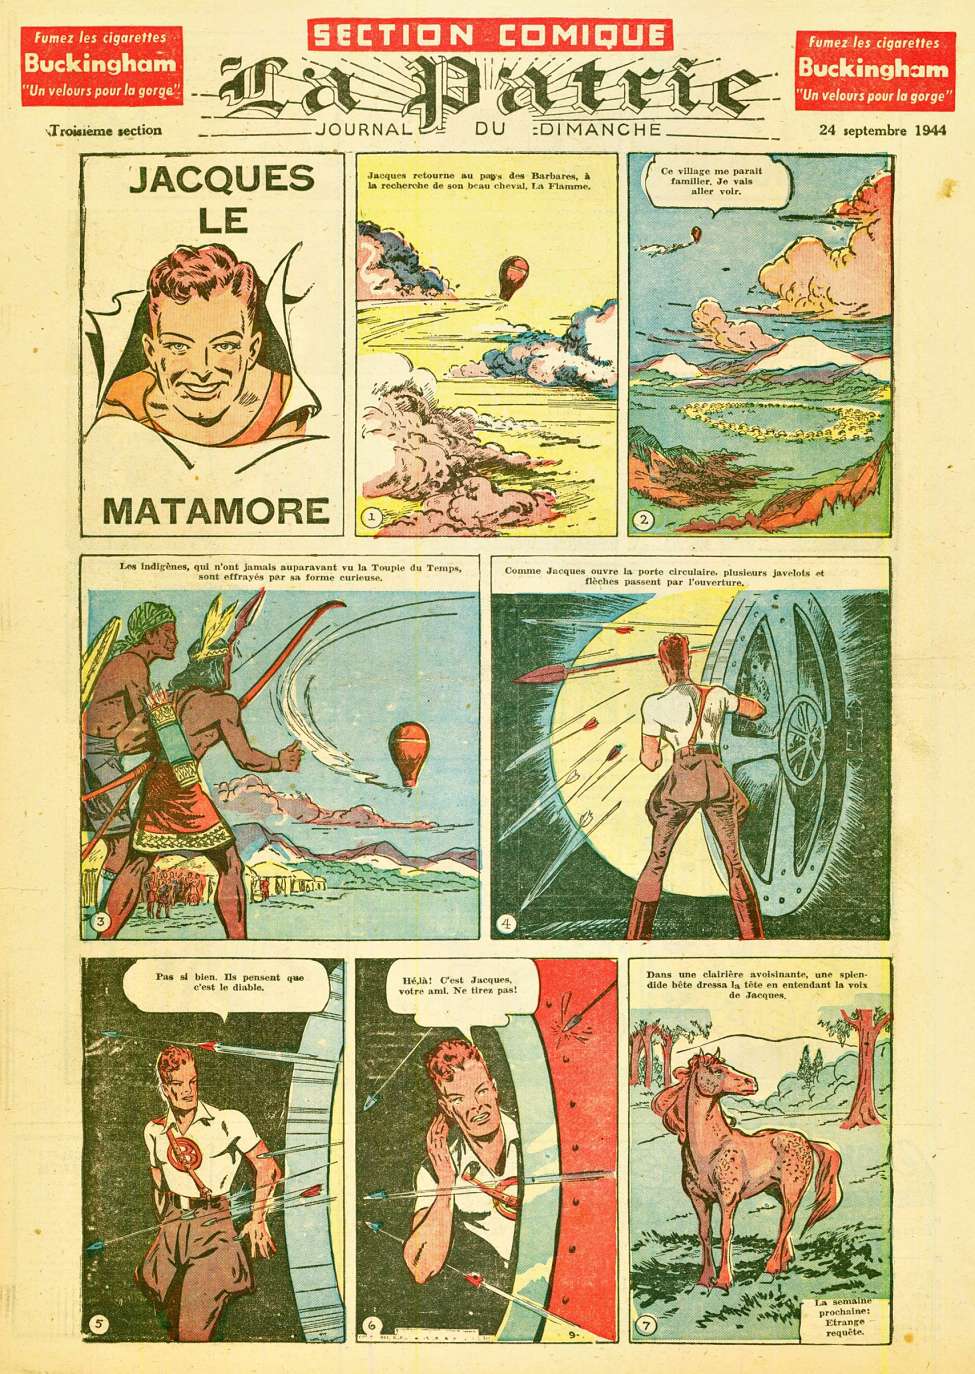 Book Cover For La Patrie - Section Comique (1944-09-24)